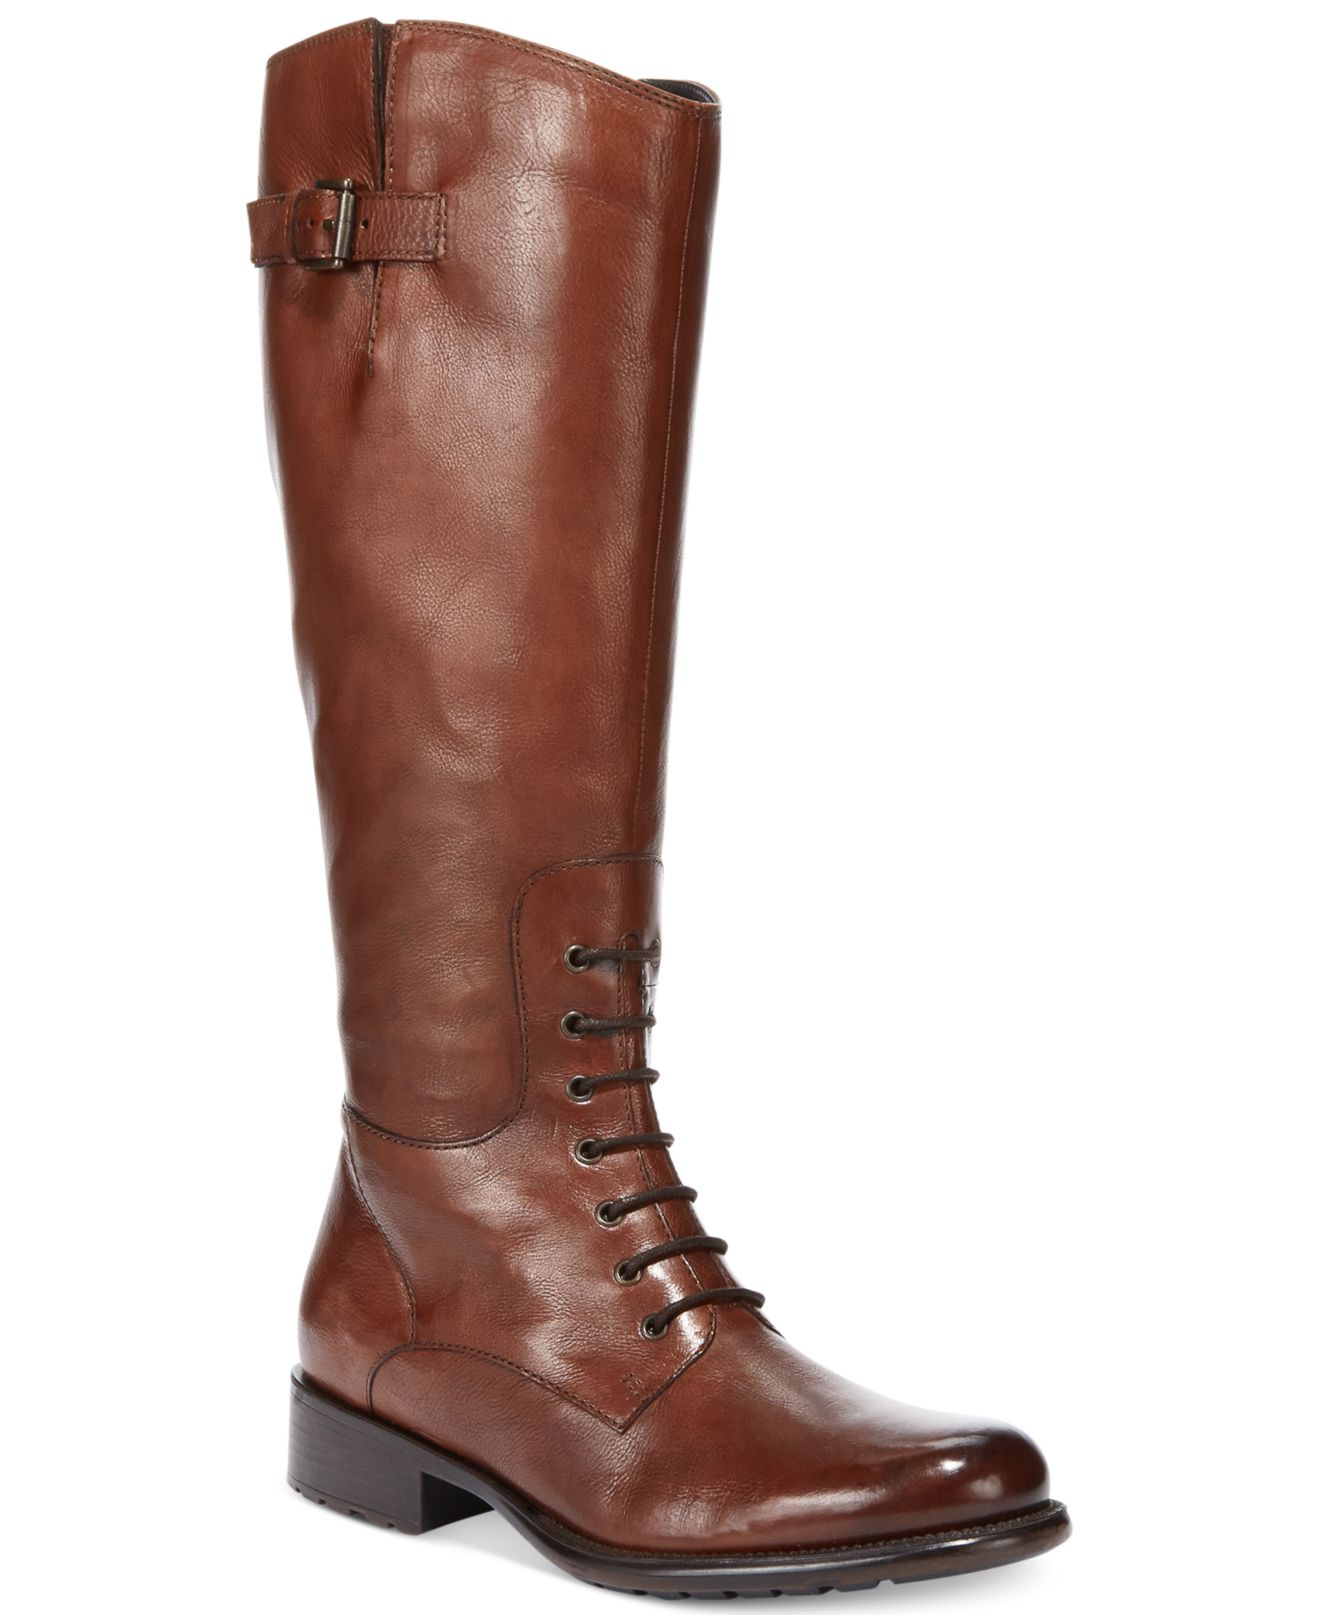 clarks women's tall brown boots